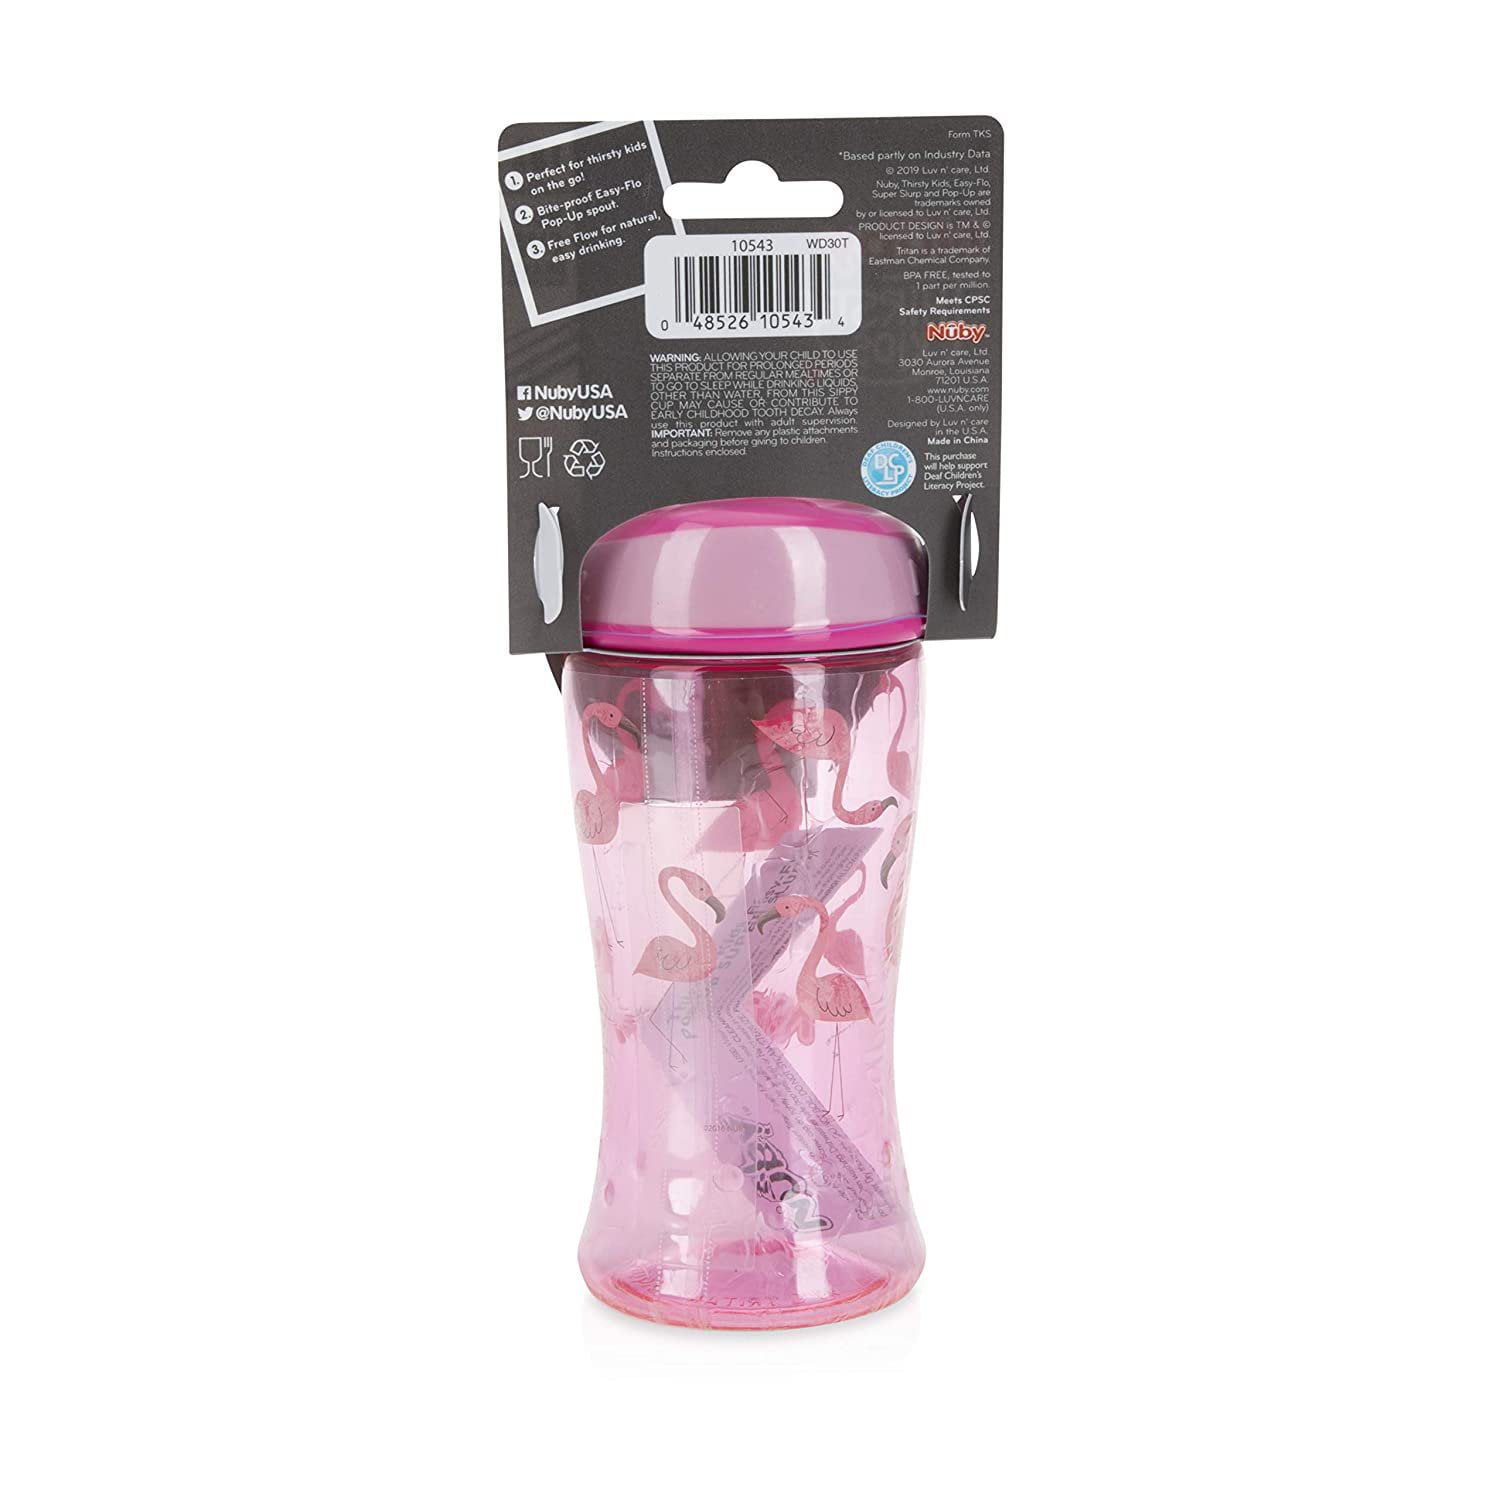 Nuby Thirsty Kids 12oz Flip-it Boost Cup, Flamingos - Walmart.com